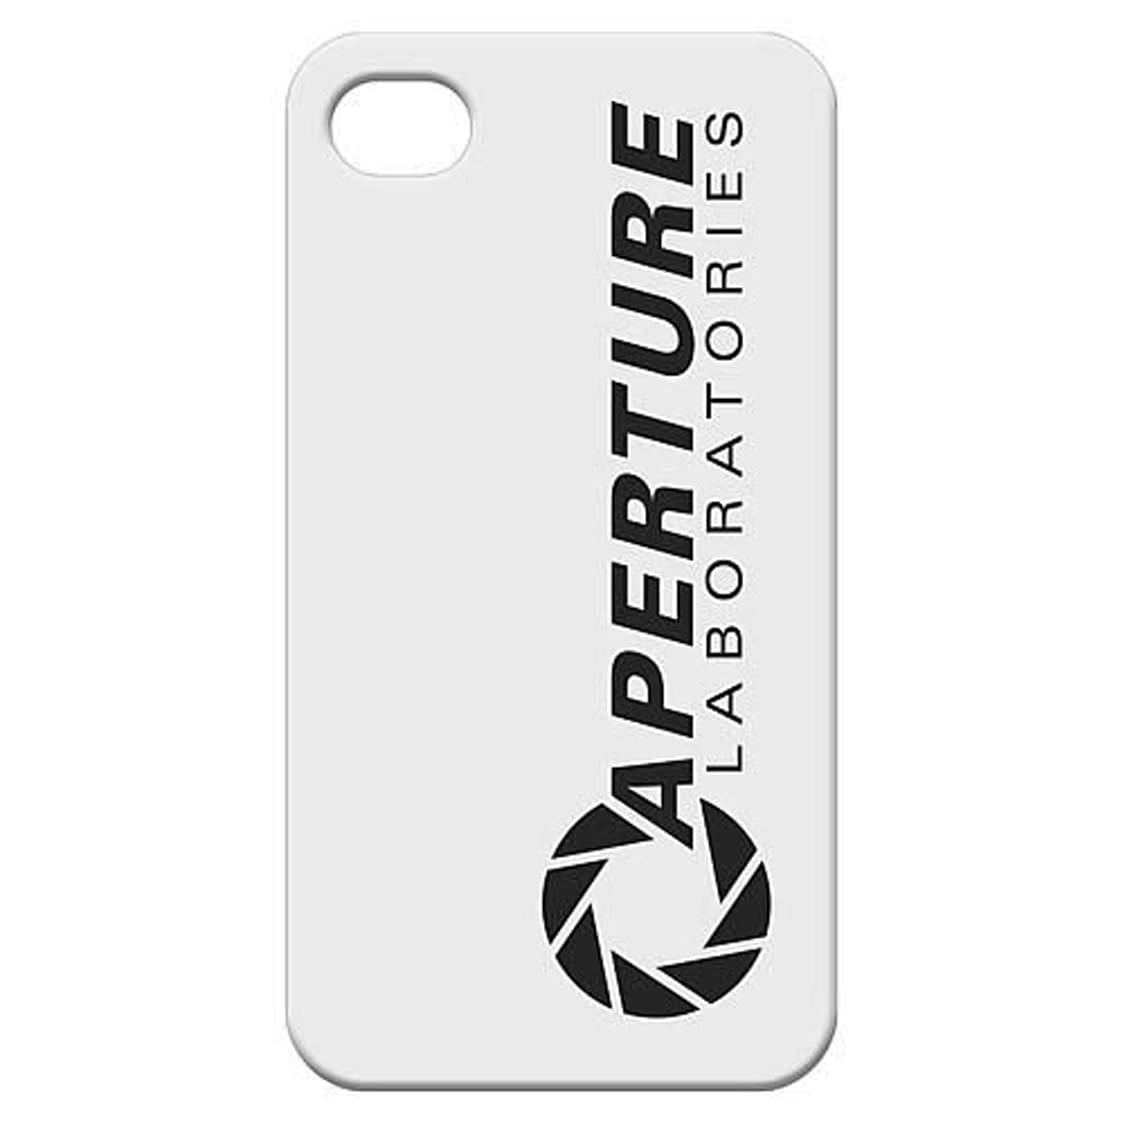 Portal 2 Iphone 4 Aperture Laboratories 80'S Case